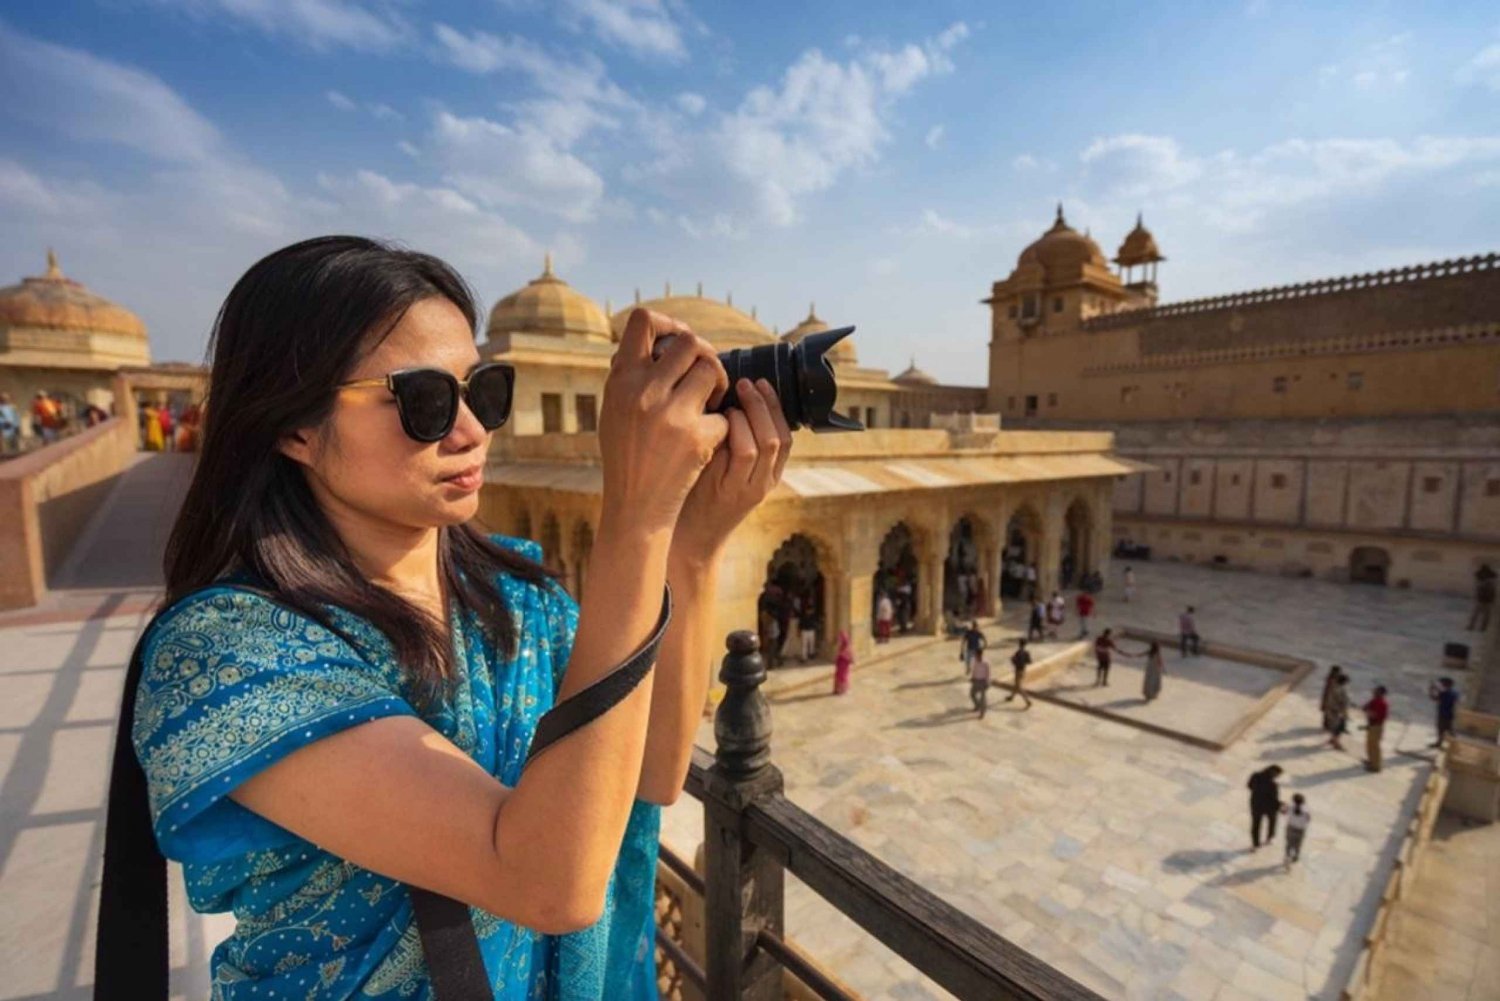 Privat Jaipur heldags stadsrundtur - allt inklusive